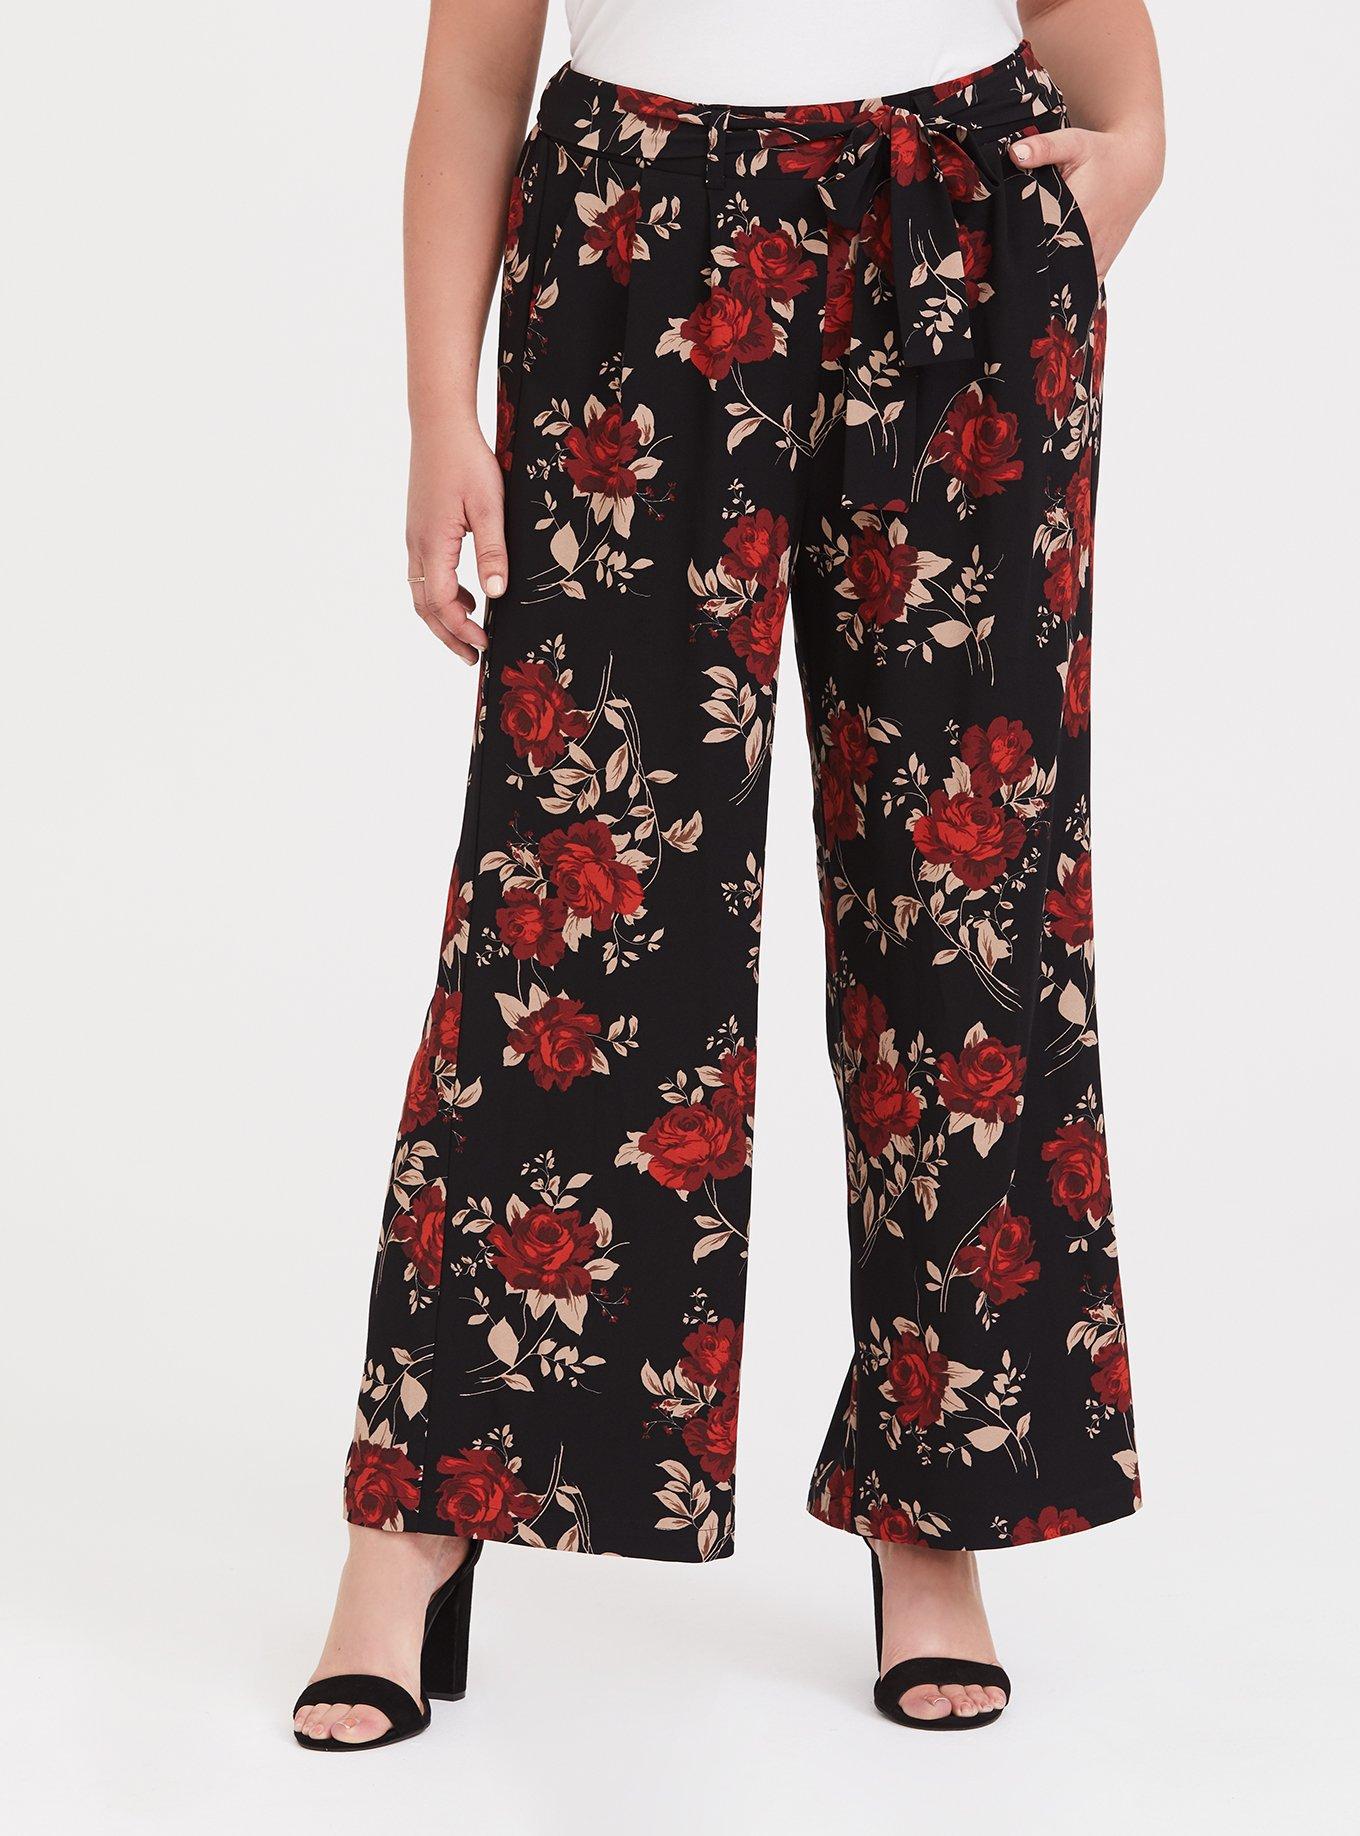 Plus Size - Black & Red Floral Wide Leg Pant - Torrid